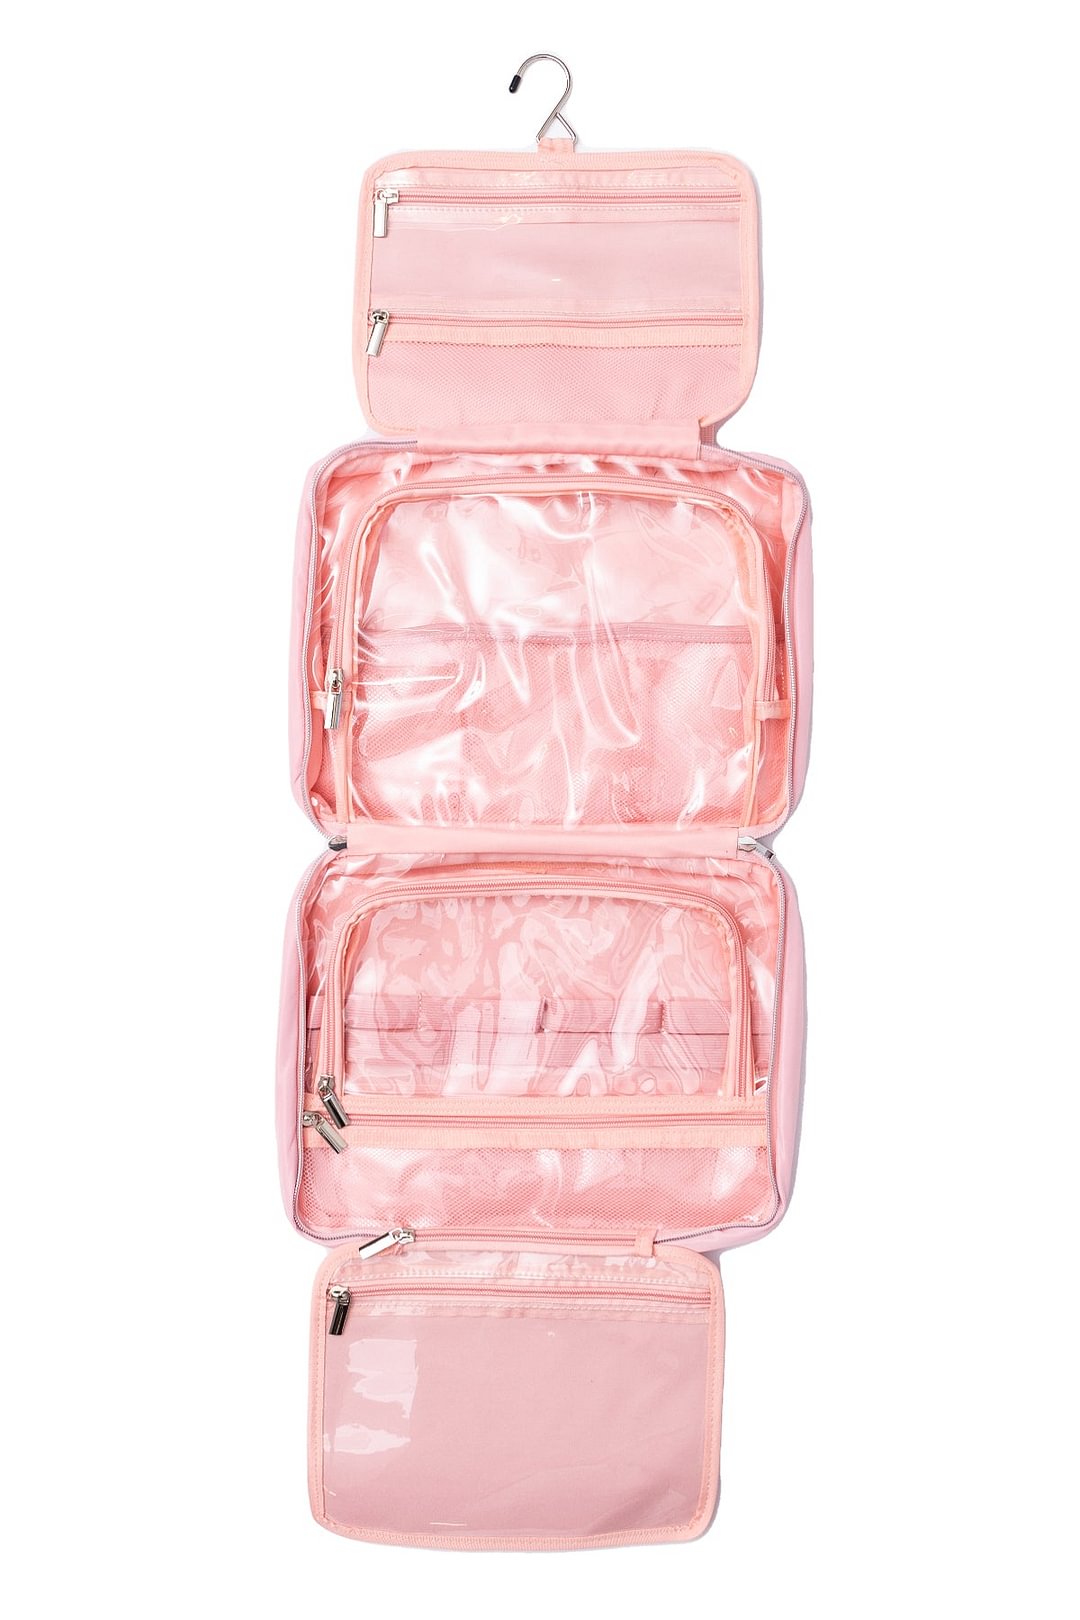 Destined For Forever Pink Hanging Makeup Bag shopify LILYELF